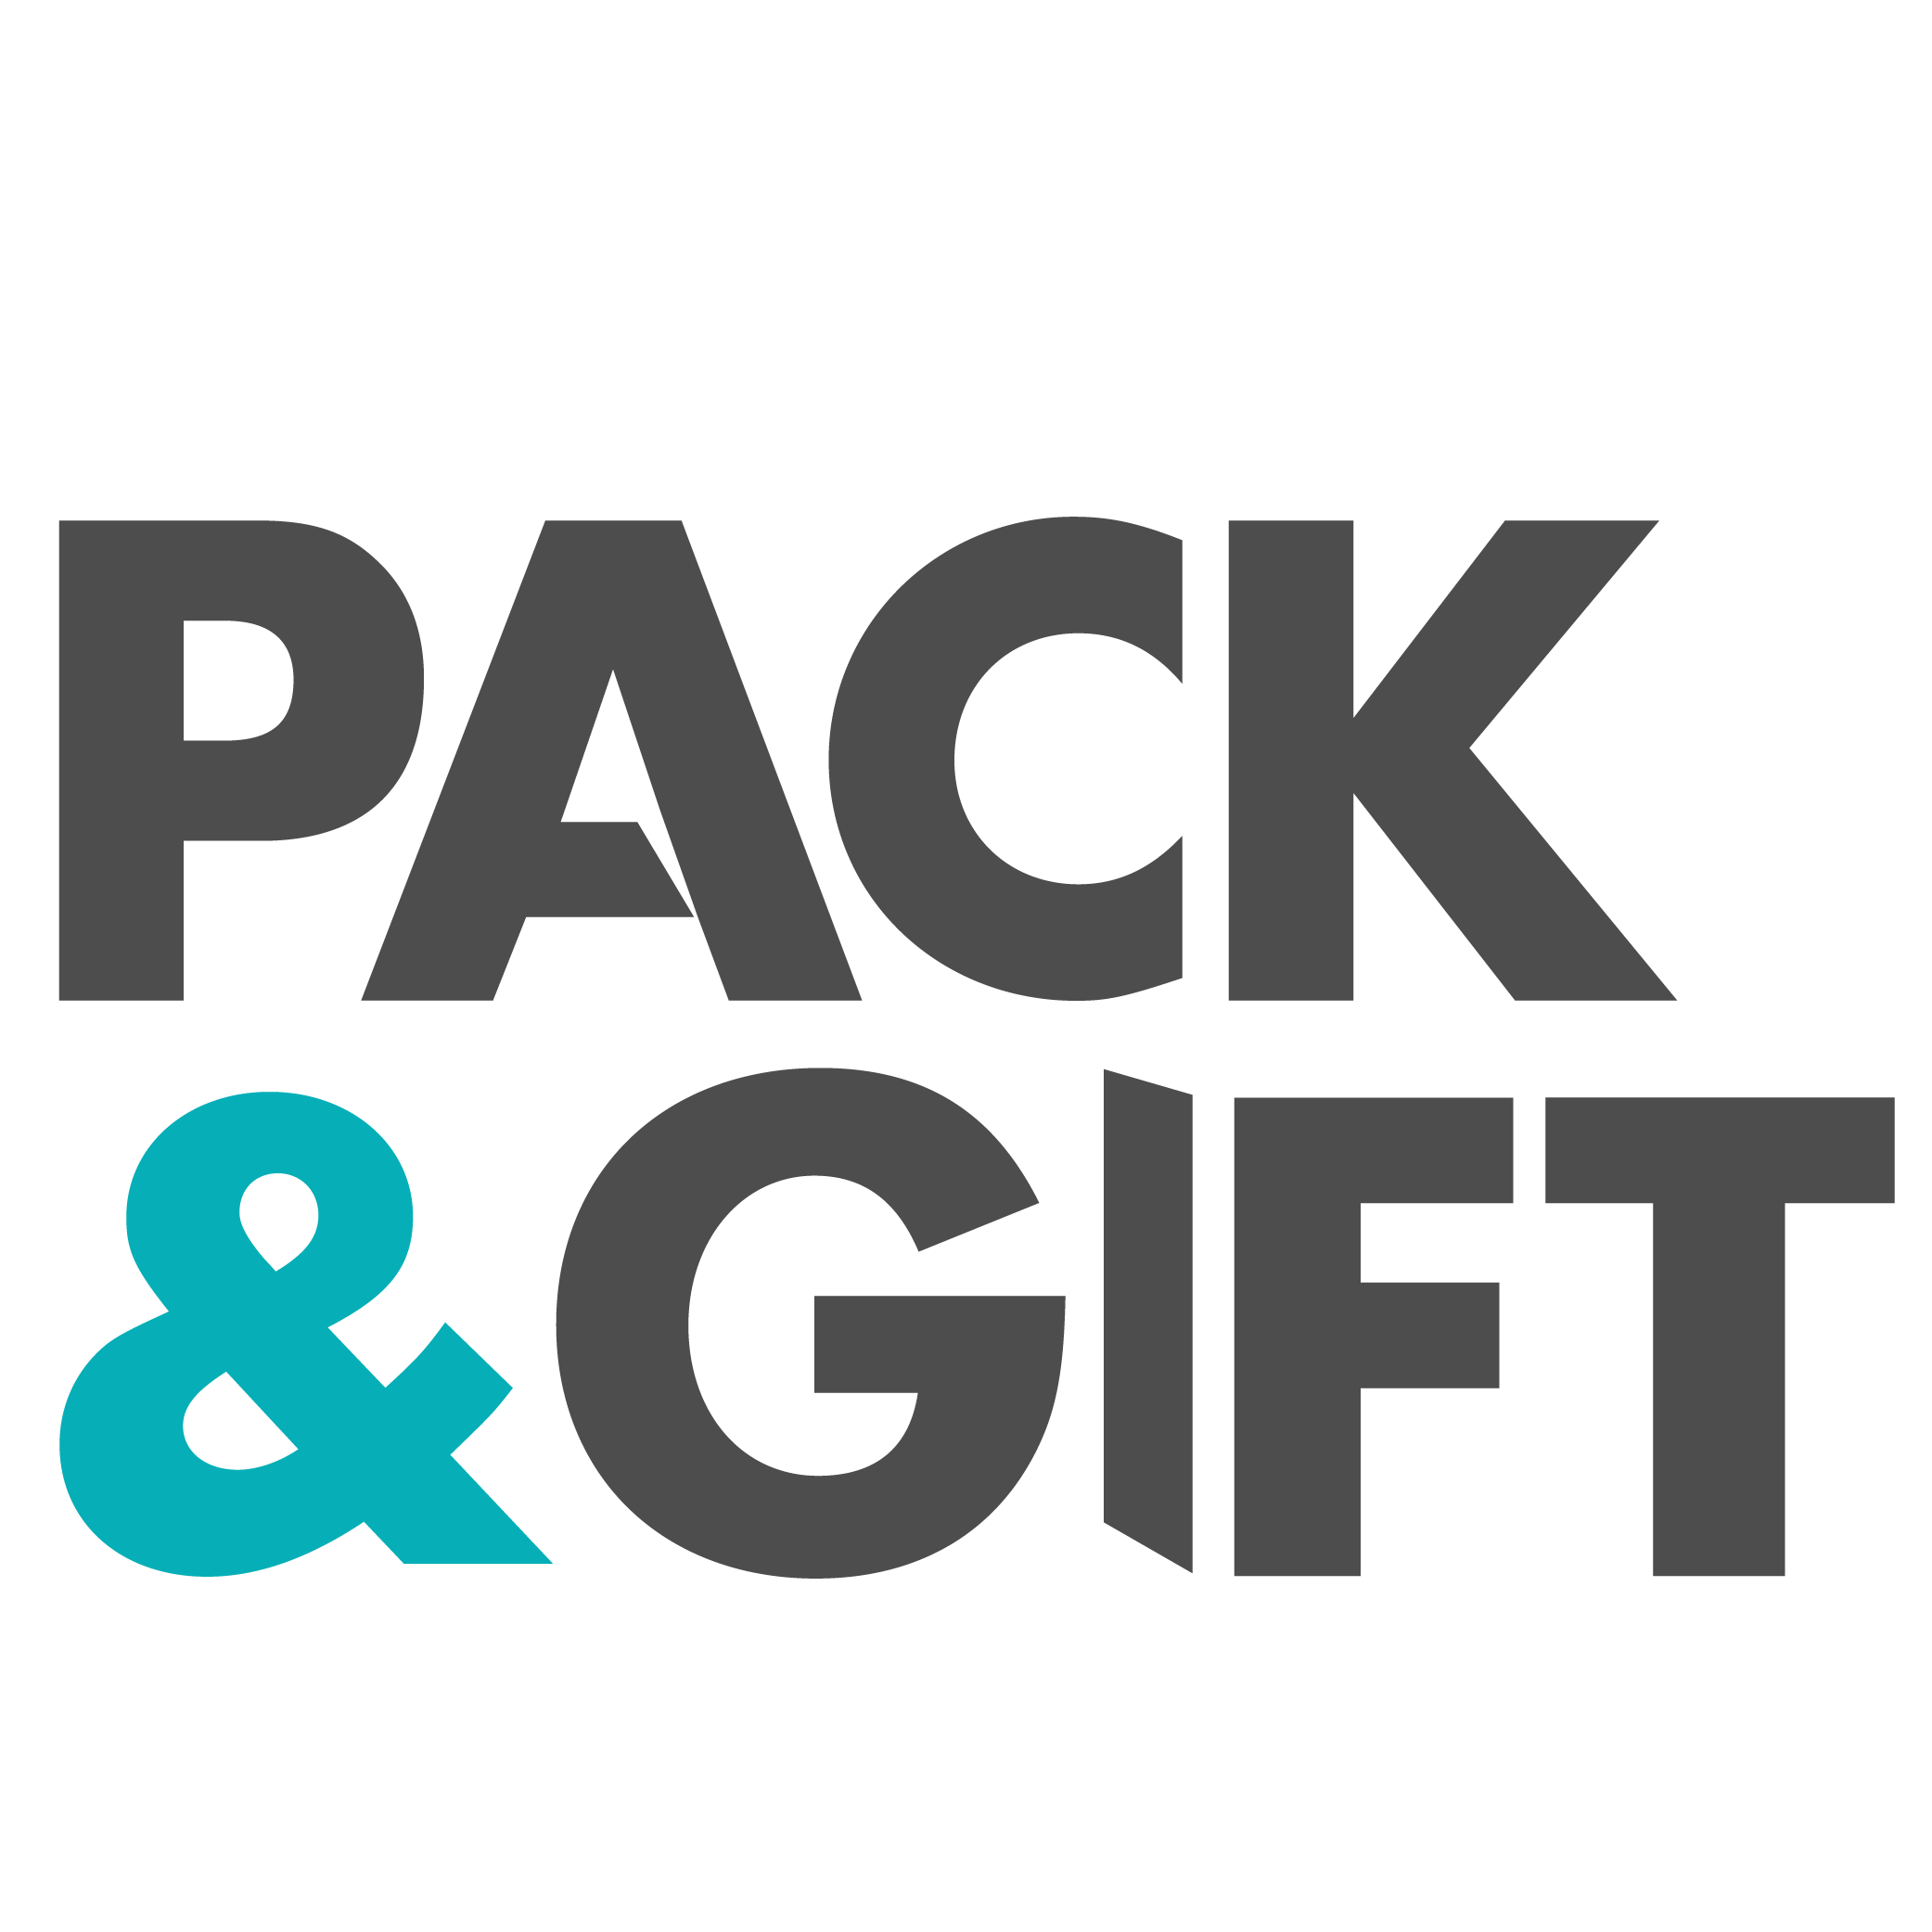 Pack Logo - Pack logo png 6 » PNG Image